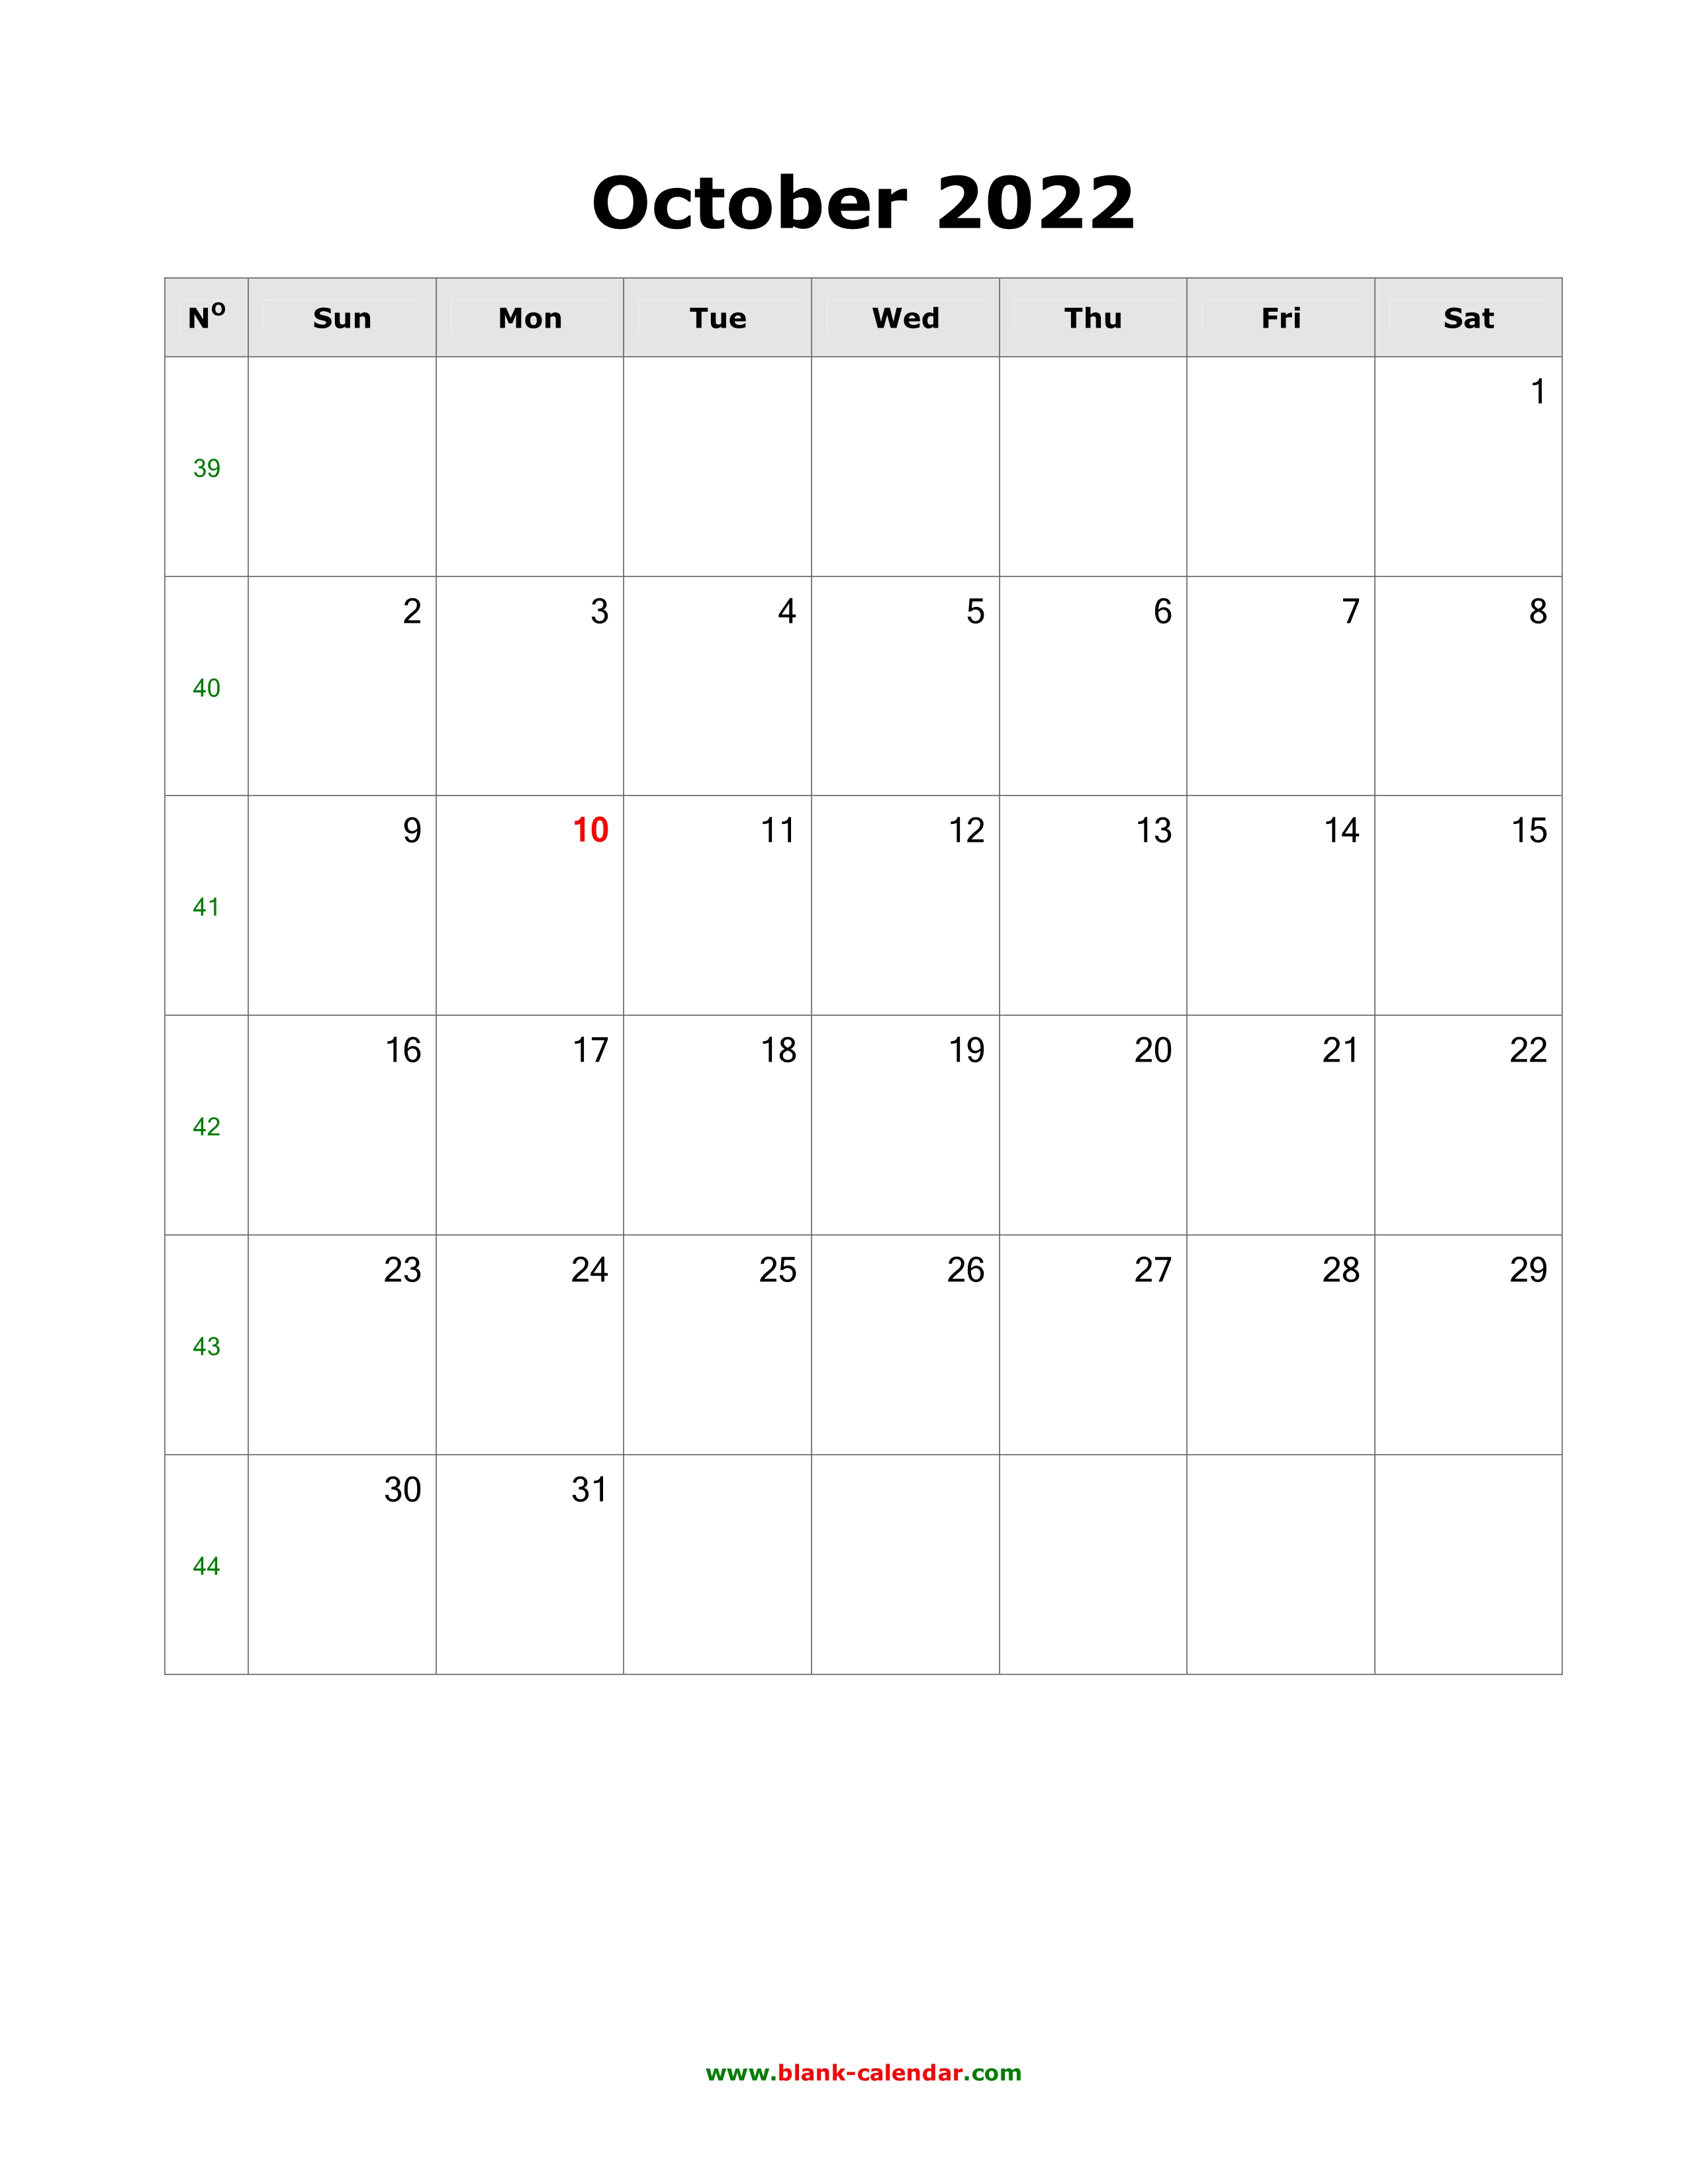 October 2022 Calendar Portrait Download October 2022 Blank Calendar (Vertical)